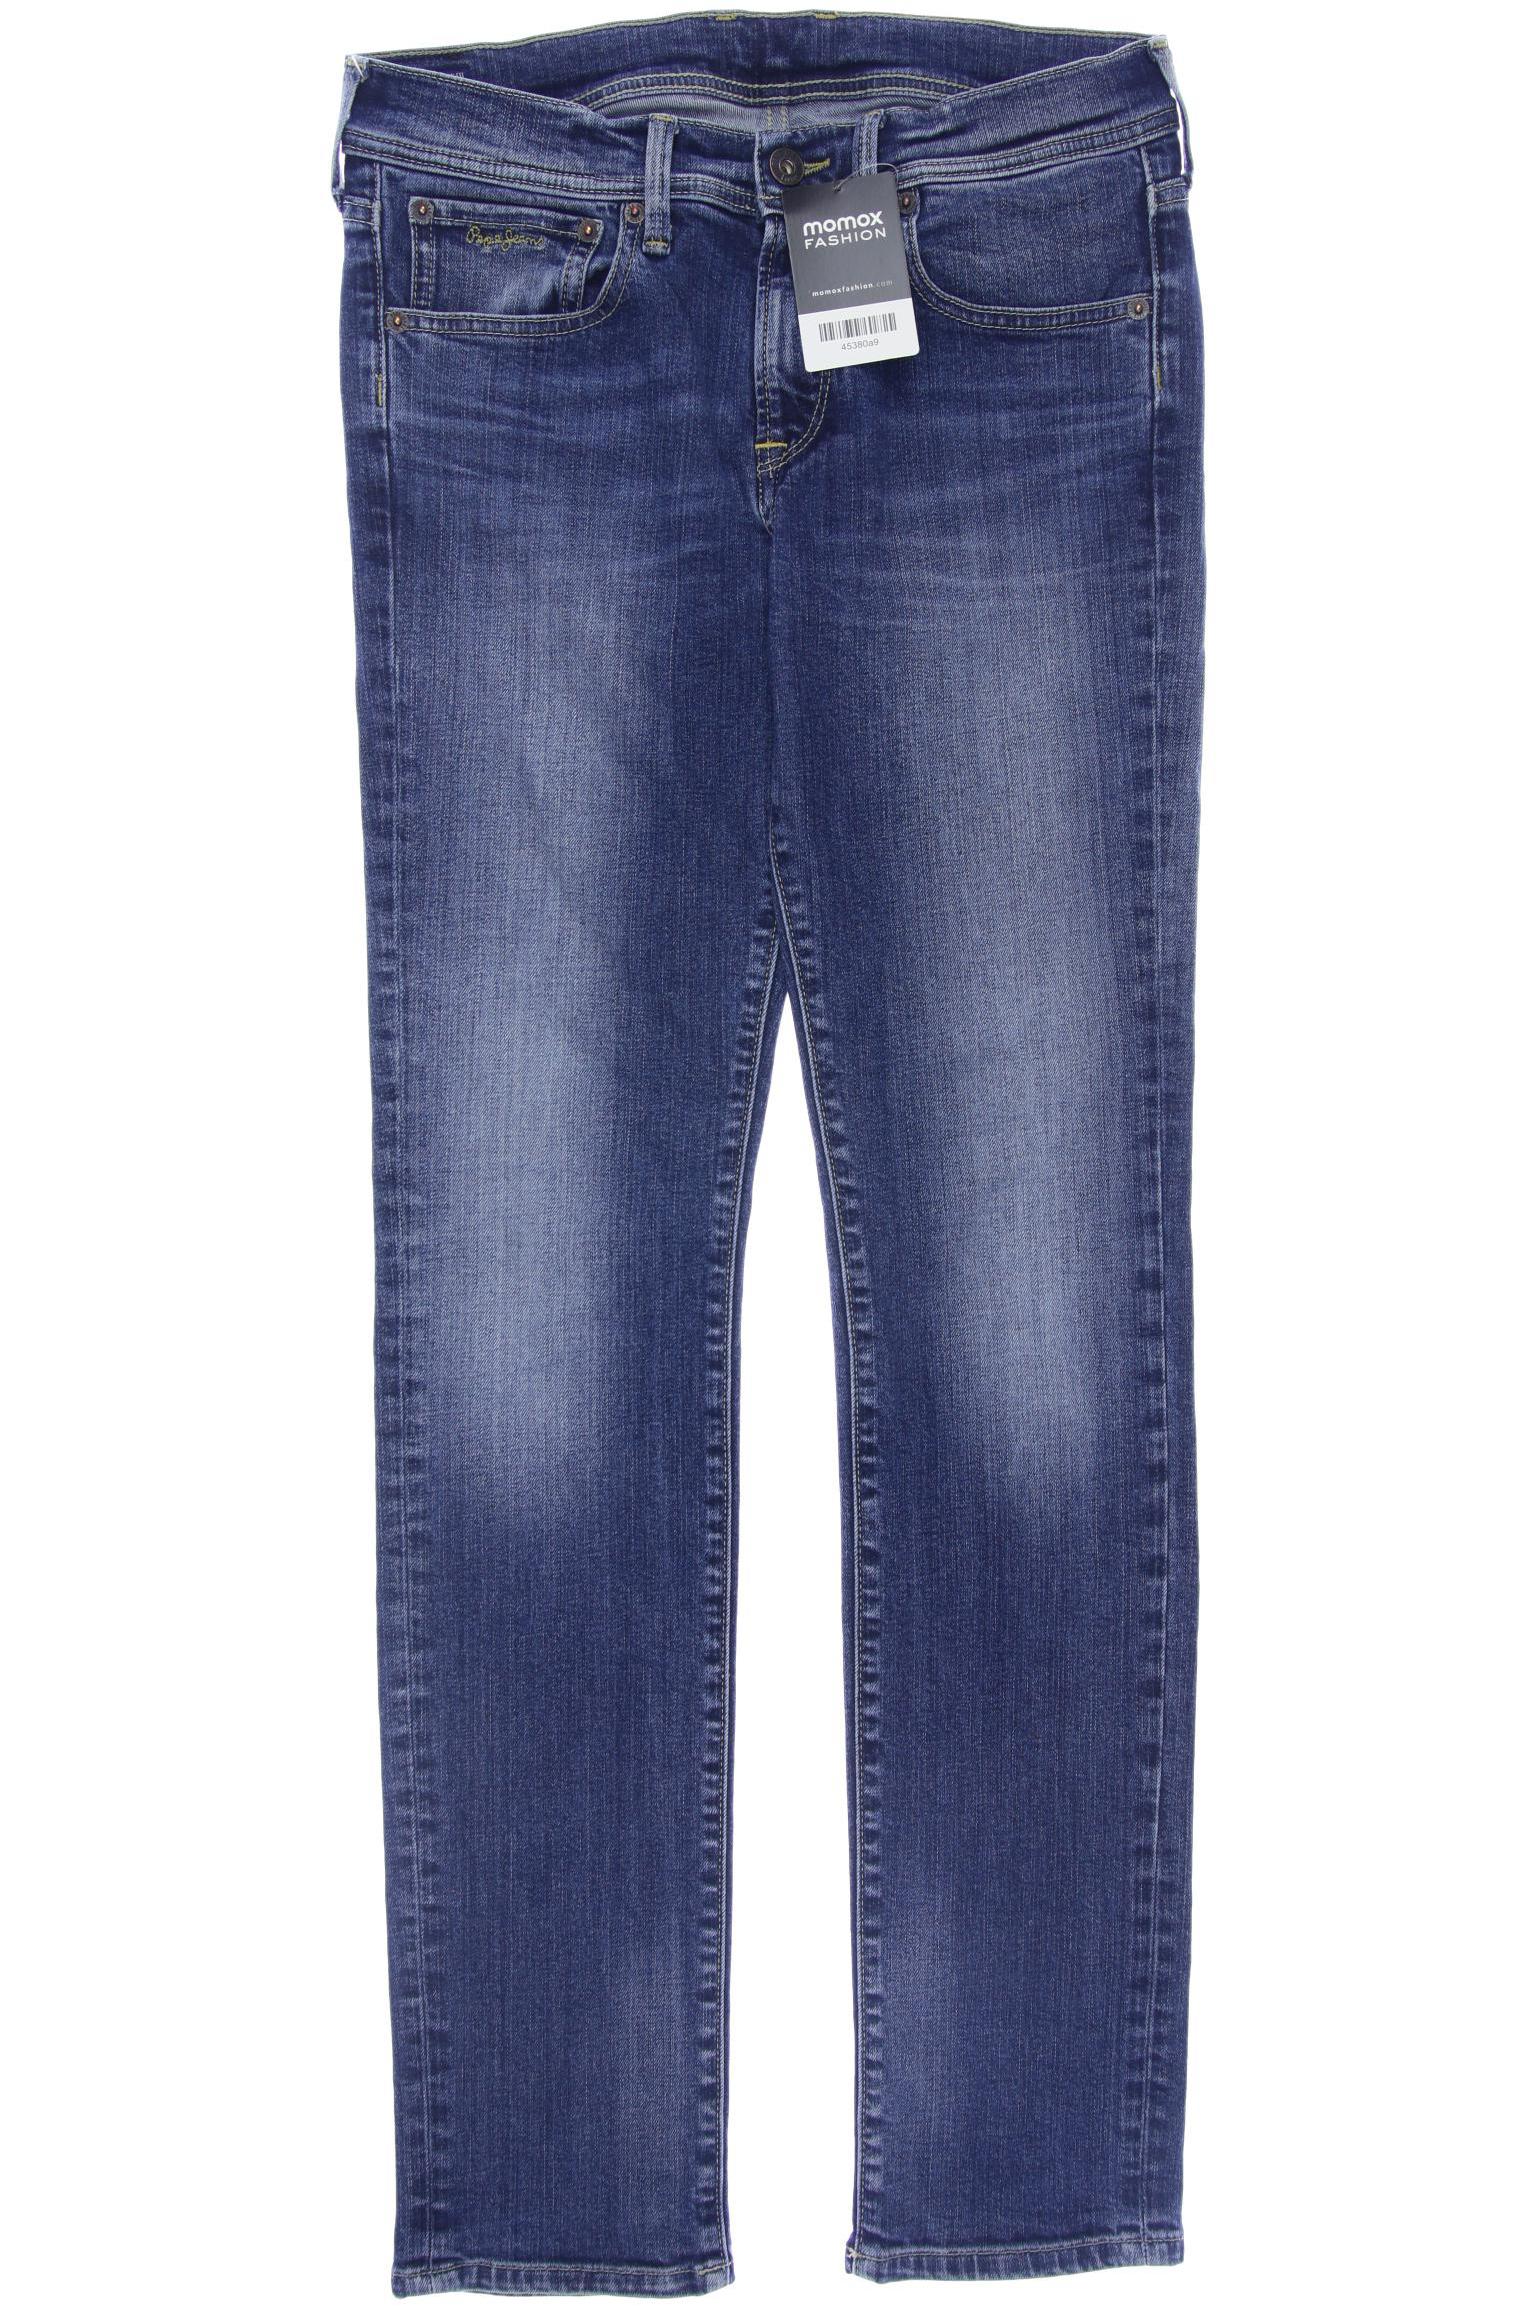 Pepe Jeans Damen Jeans, blau, Gr. 164 von Pepe Jeans